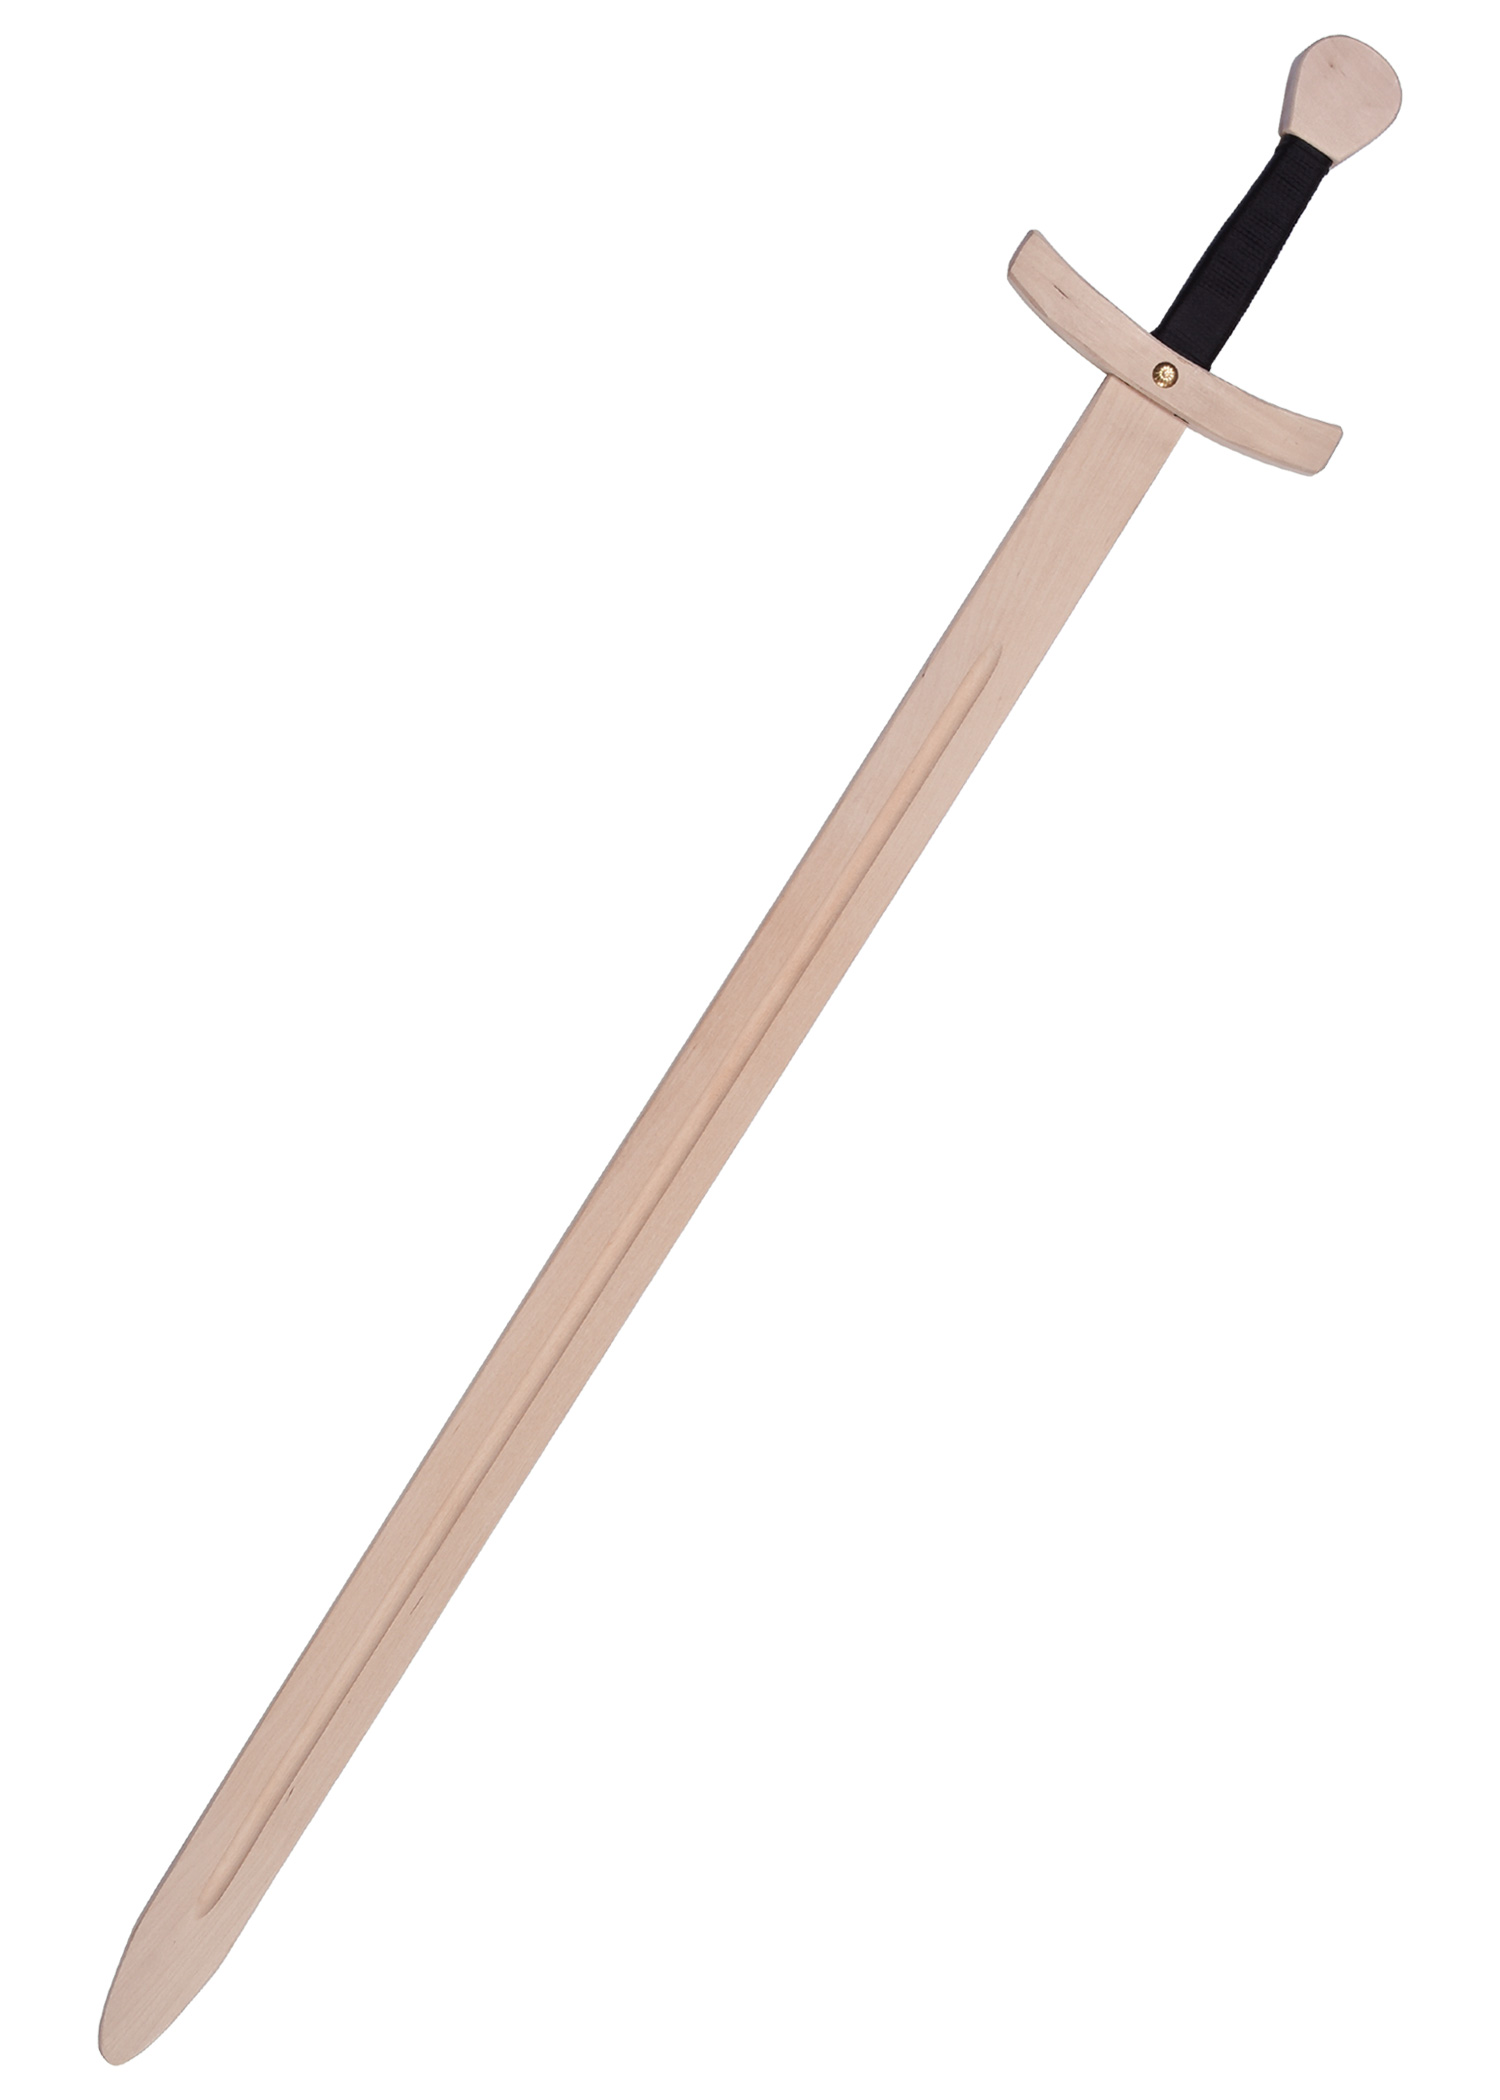 10 Timpo Toys Ritterschwerter Knight Swords 